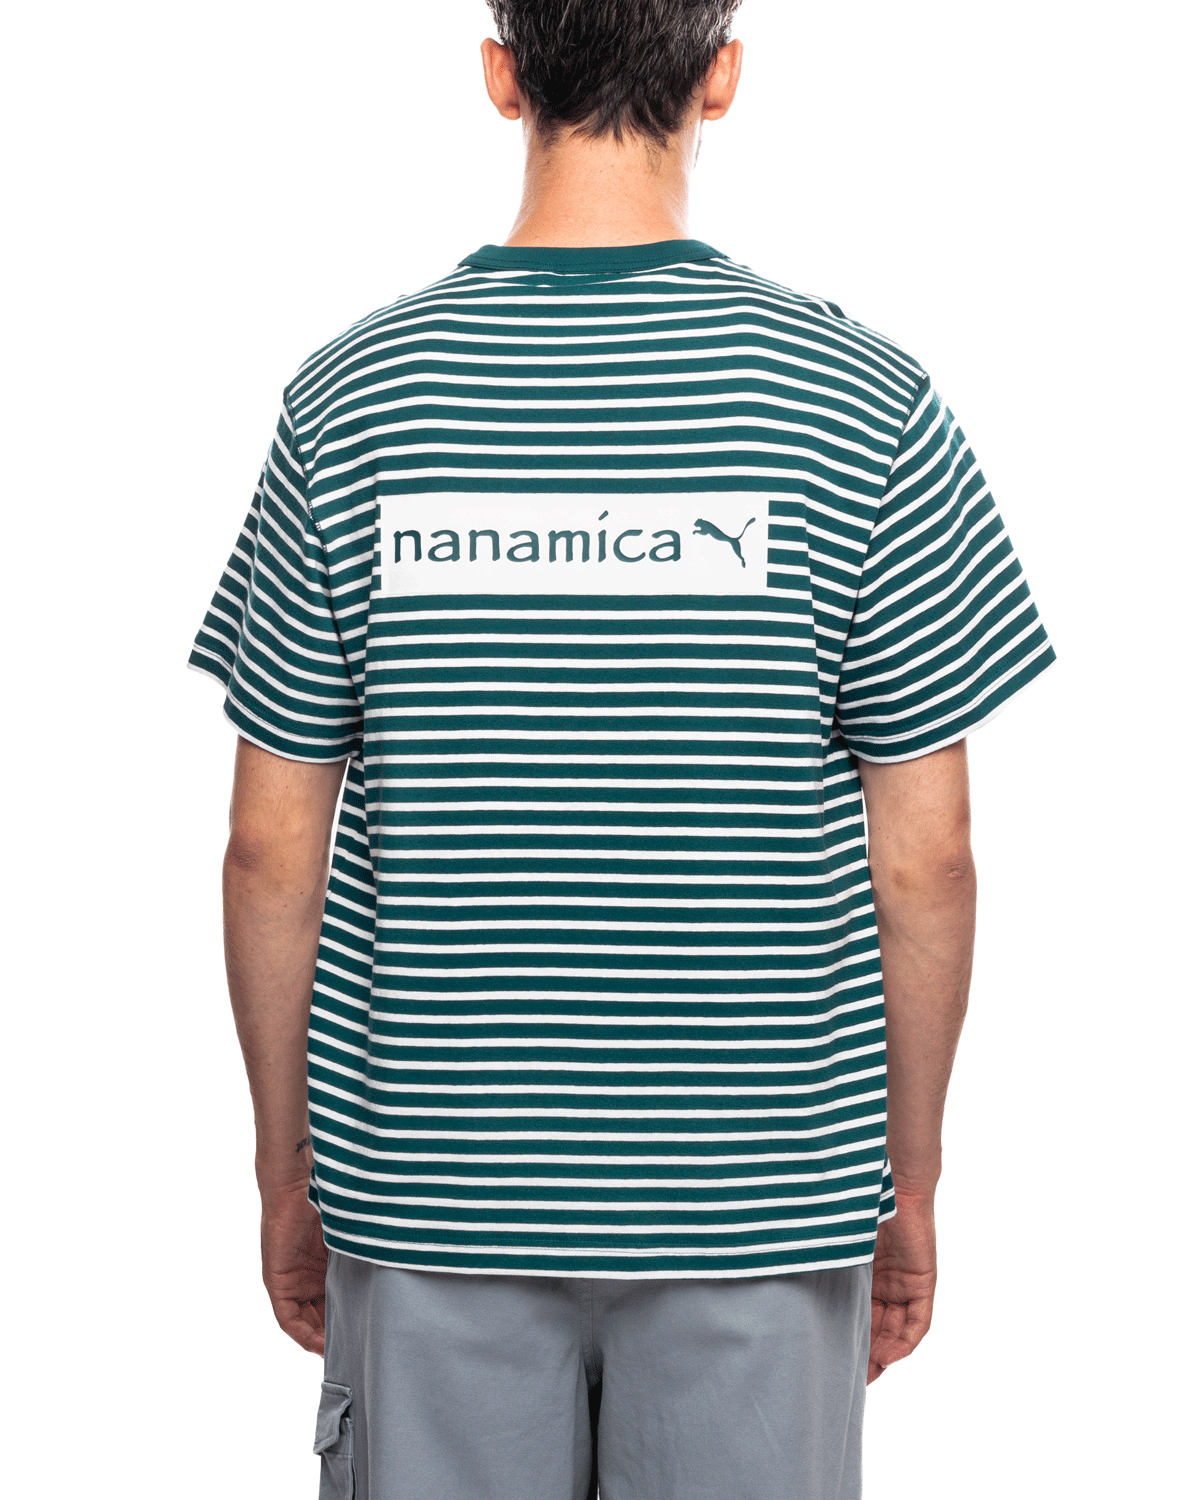 Nanamica x Puma Striped Tee Varsity Green